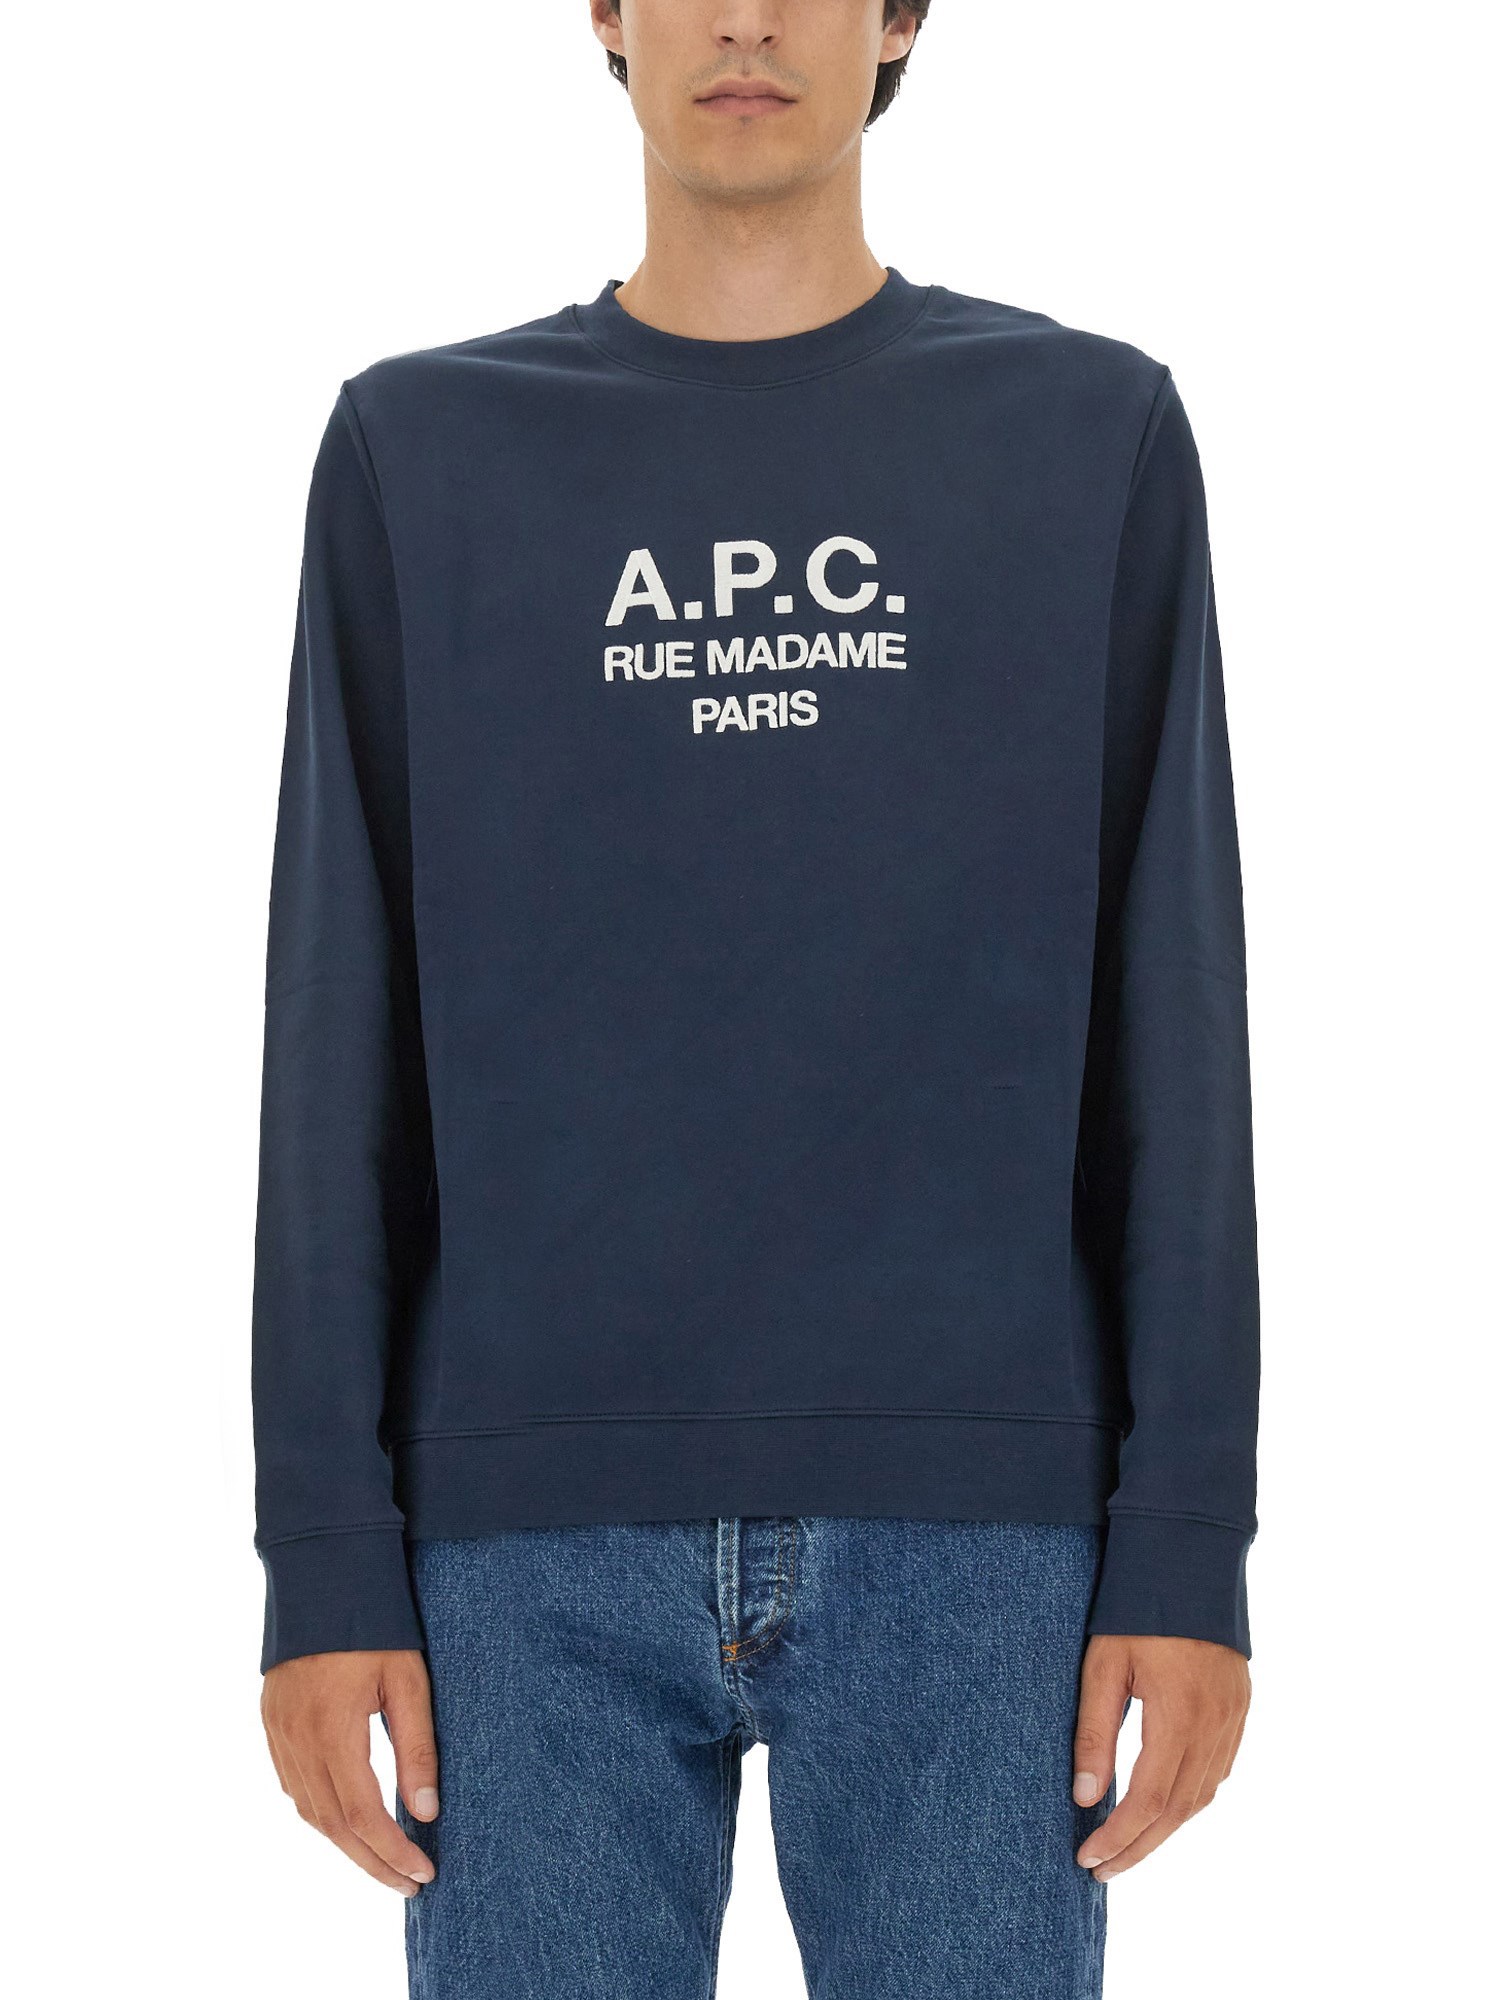 A.P.C. a.p.c. "rufus" sweatshirt